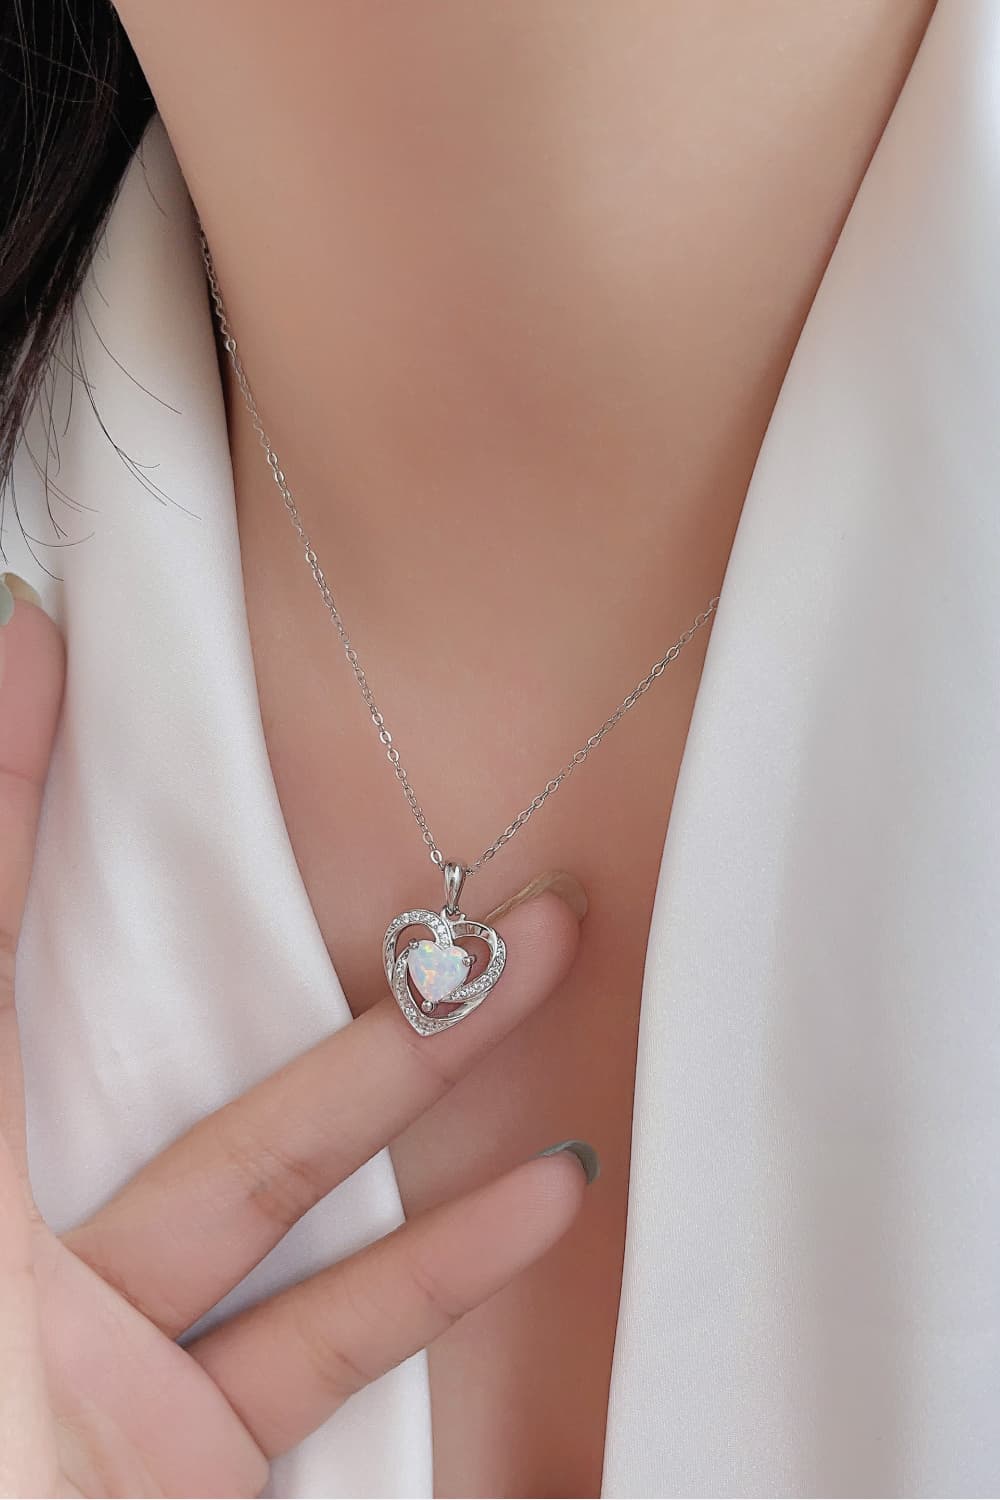 Opal Heart Pendant Necklace - bertofonsi